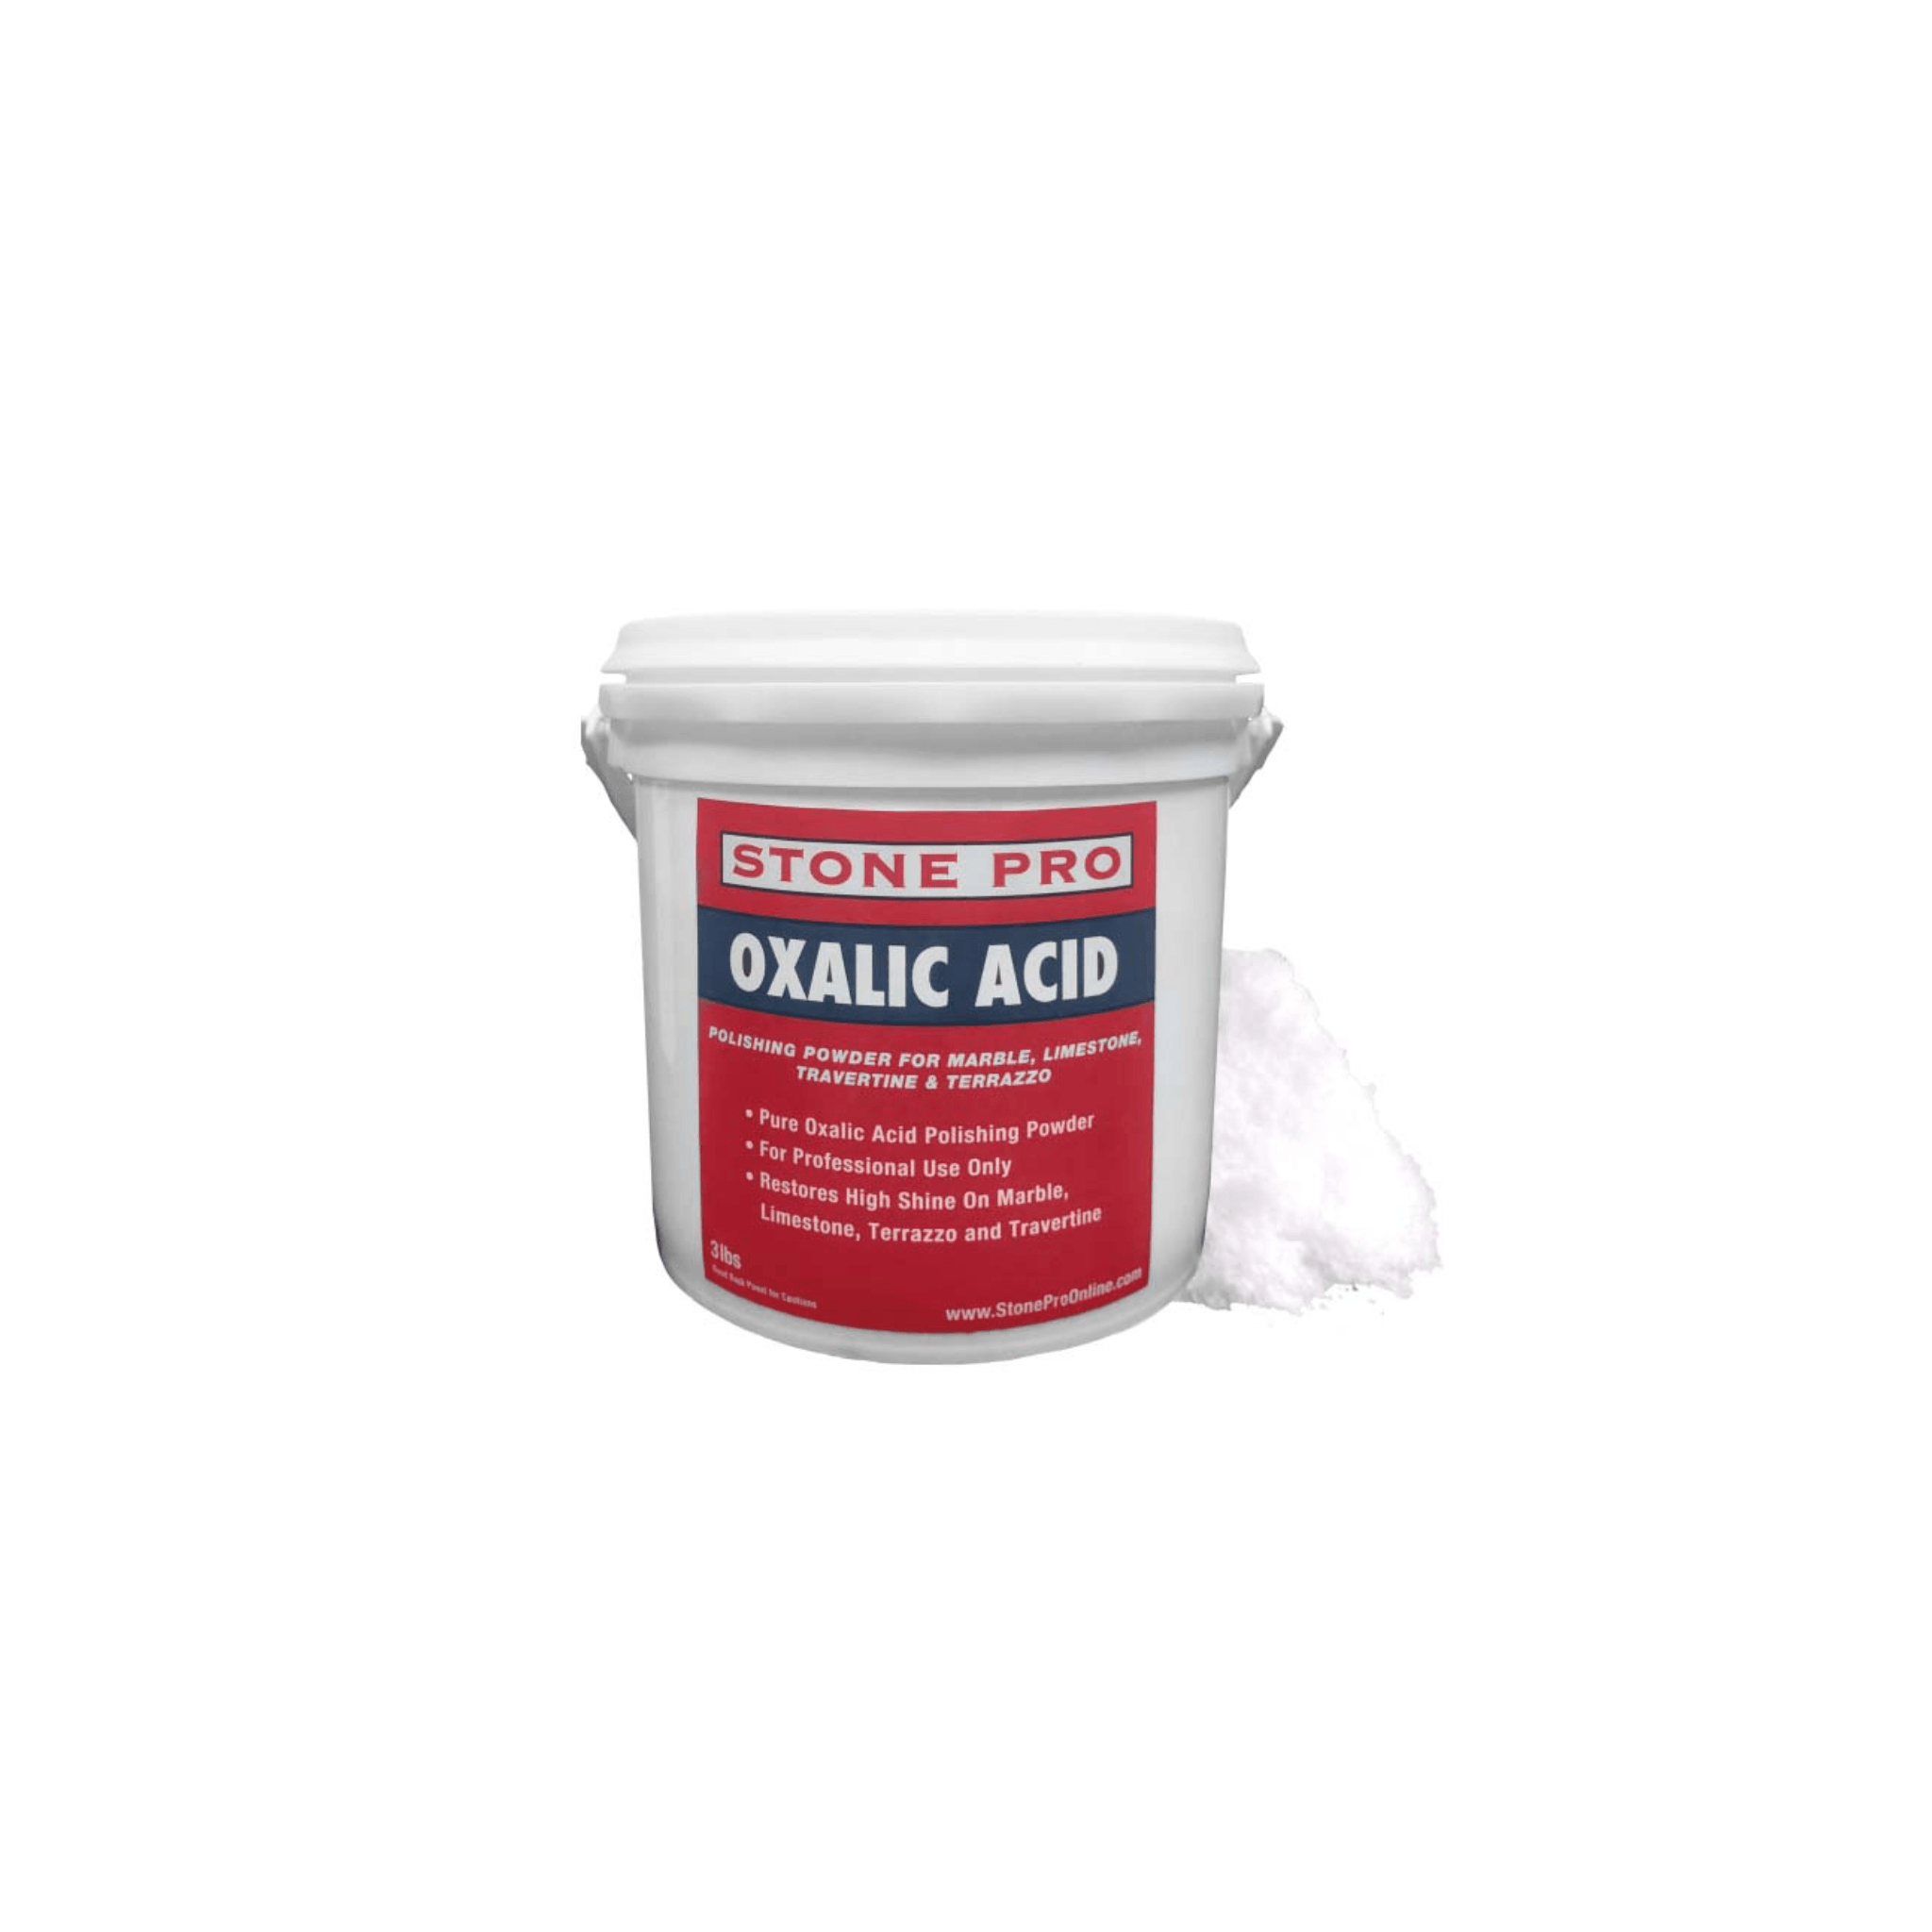 Stone Pro Oxalic Acid - Polishing Powder, 3 lbs - Direct Stone Tool Supply, Inc